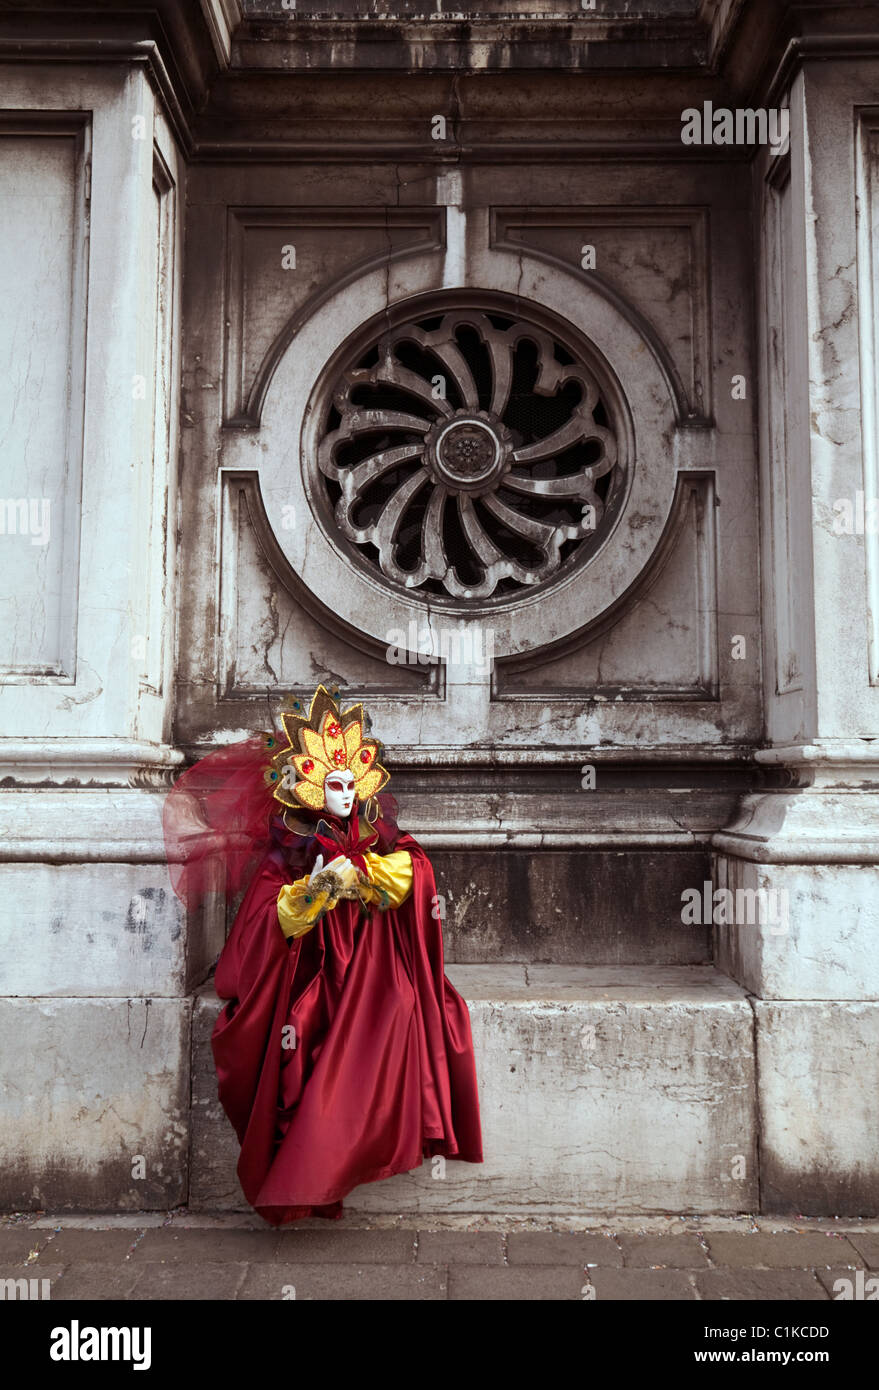 Masqueraders in costume, the Venice Carnival, Venice Italy Stock Photo